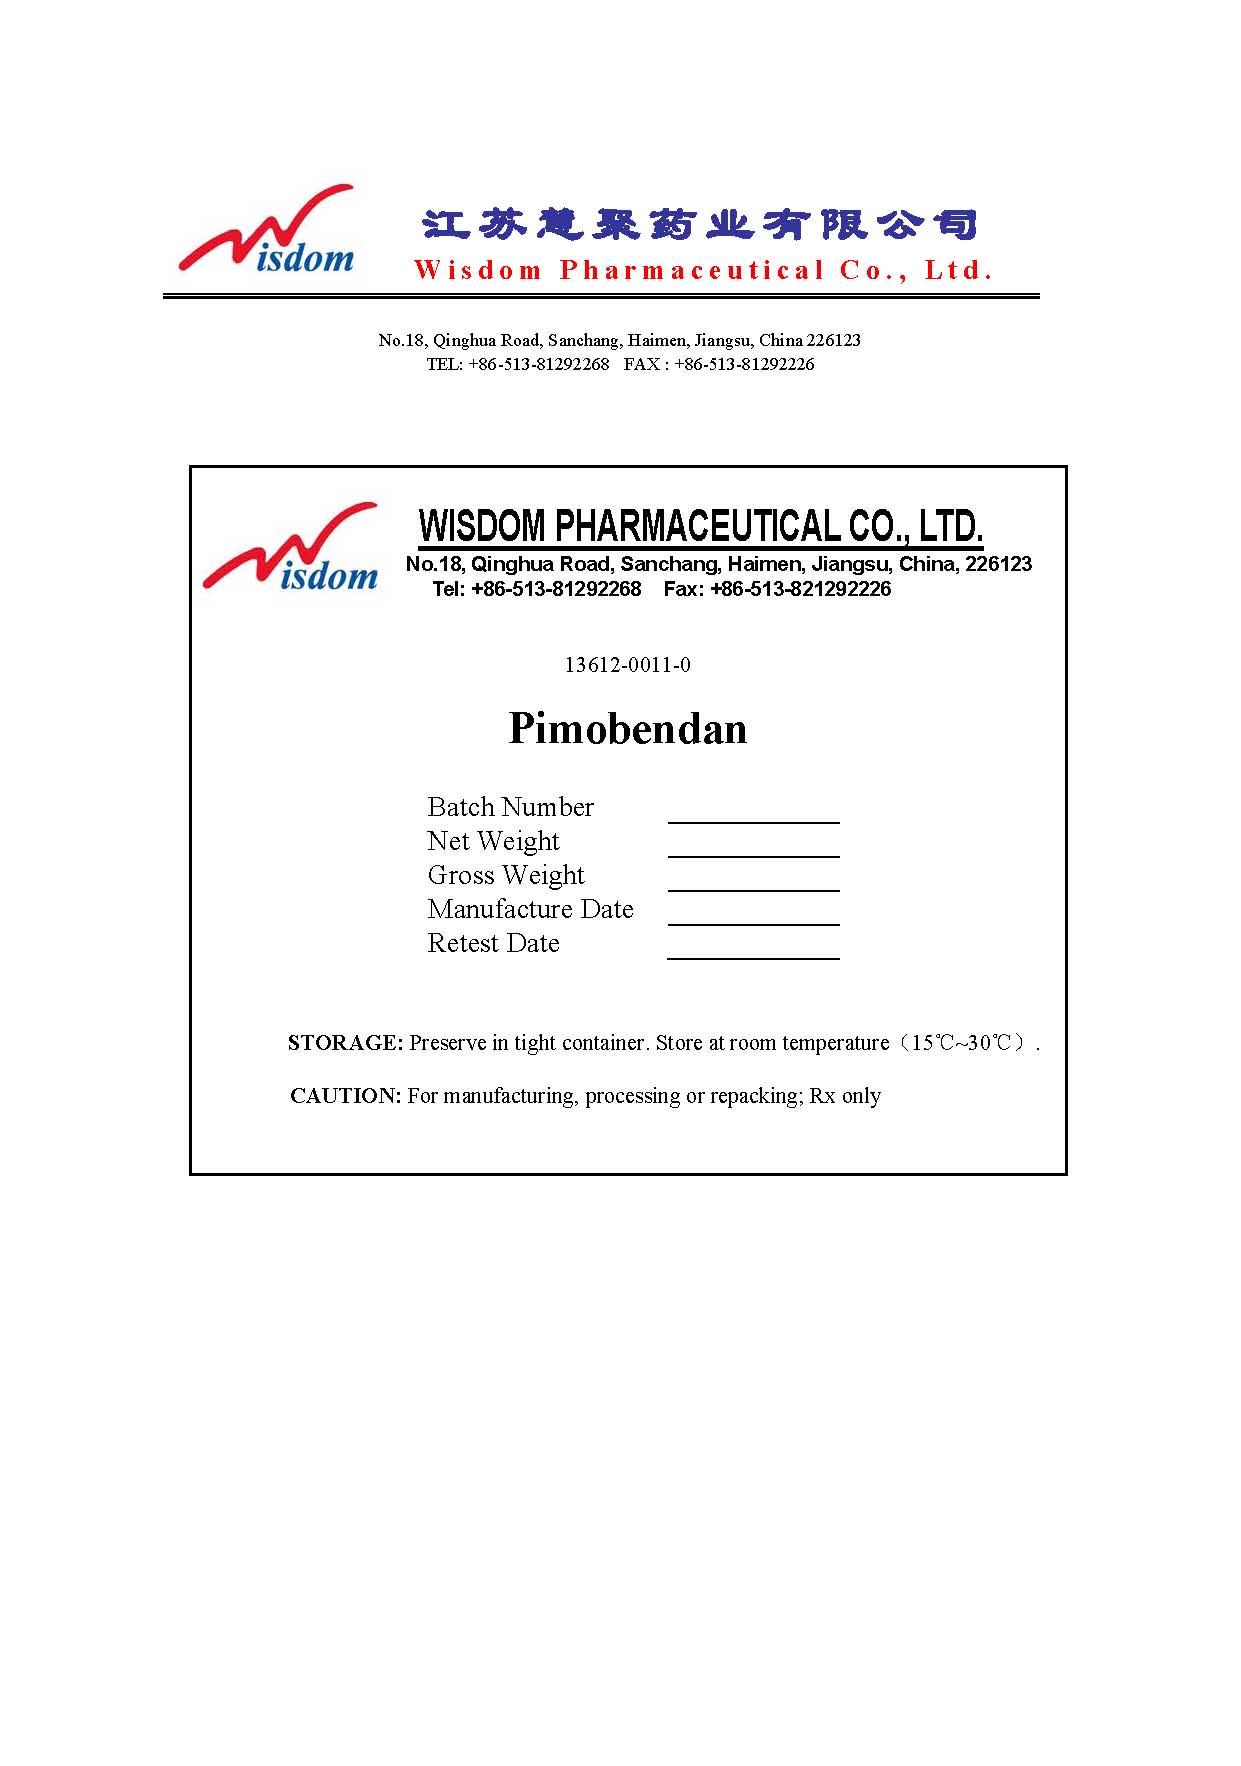 Image of Pimobendan 0.1kg Label